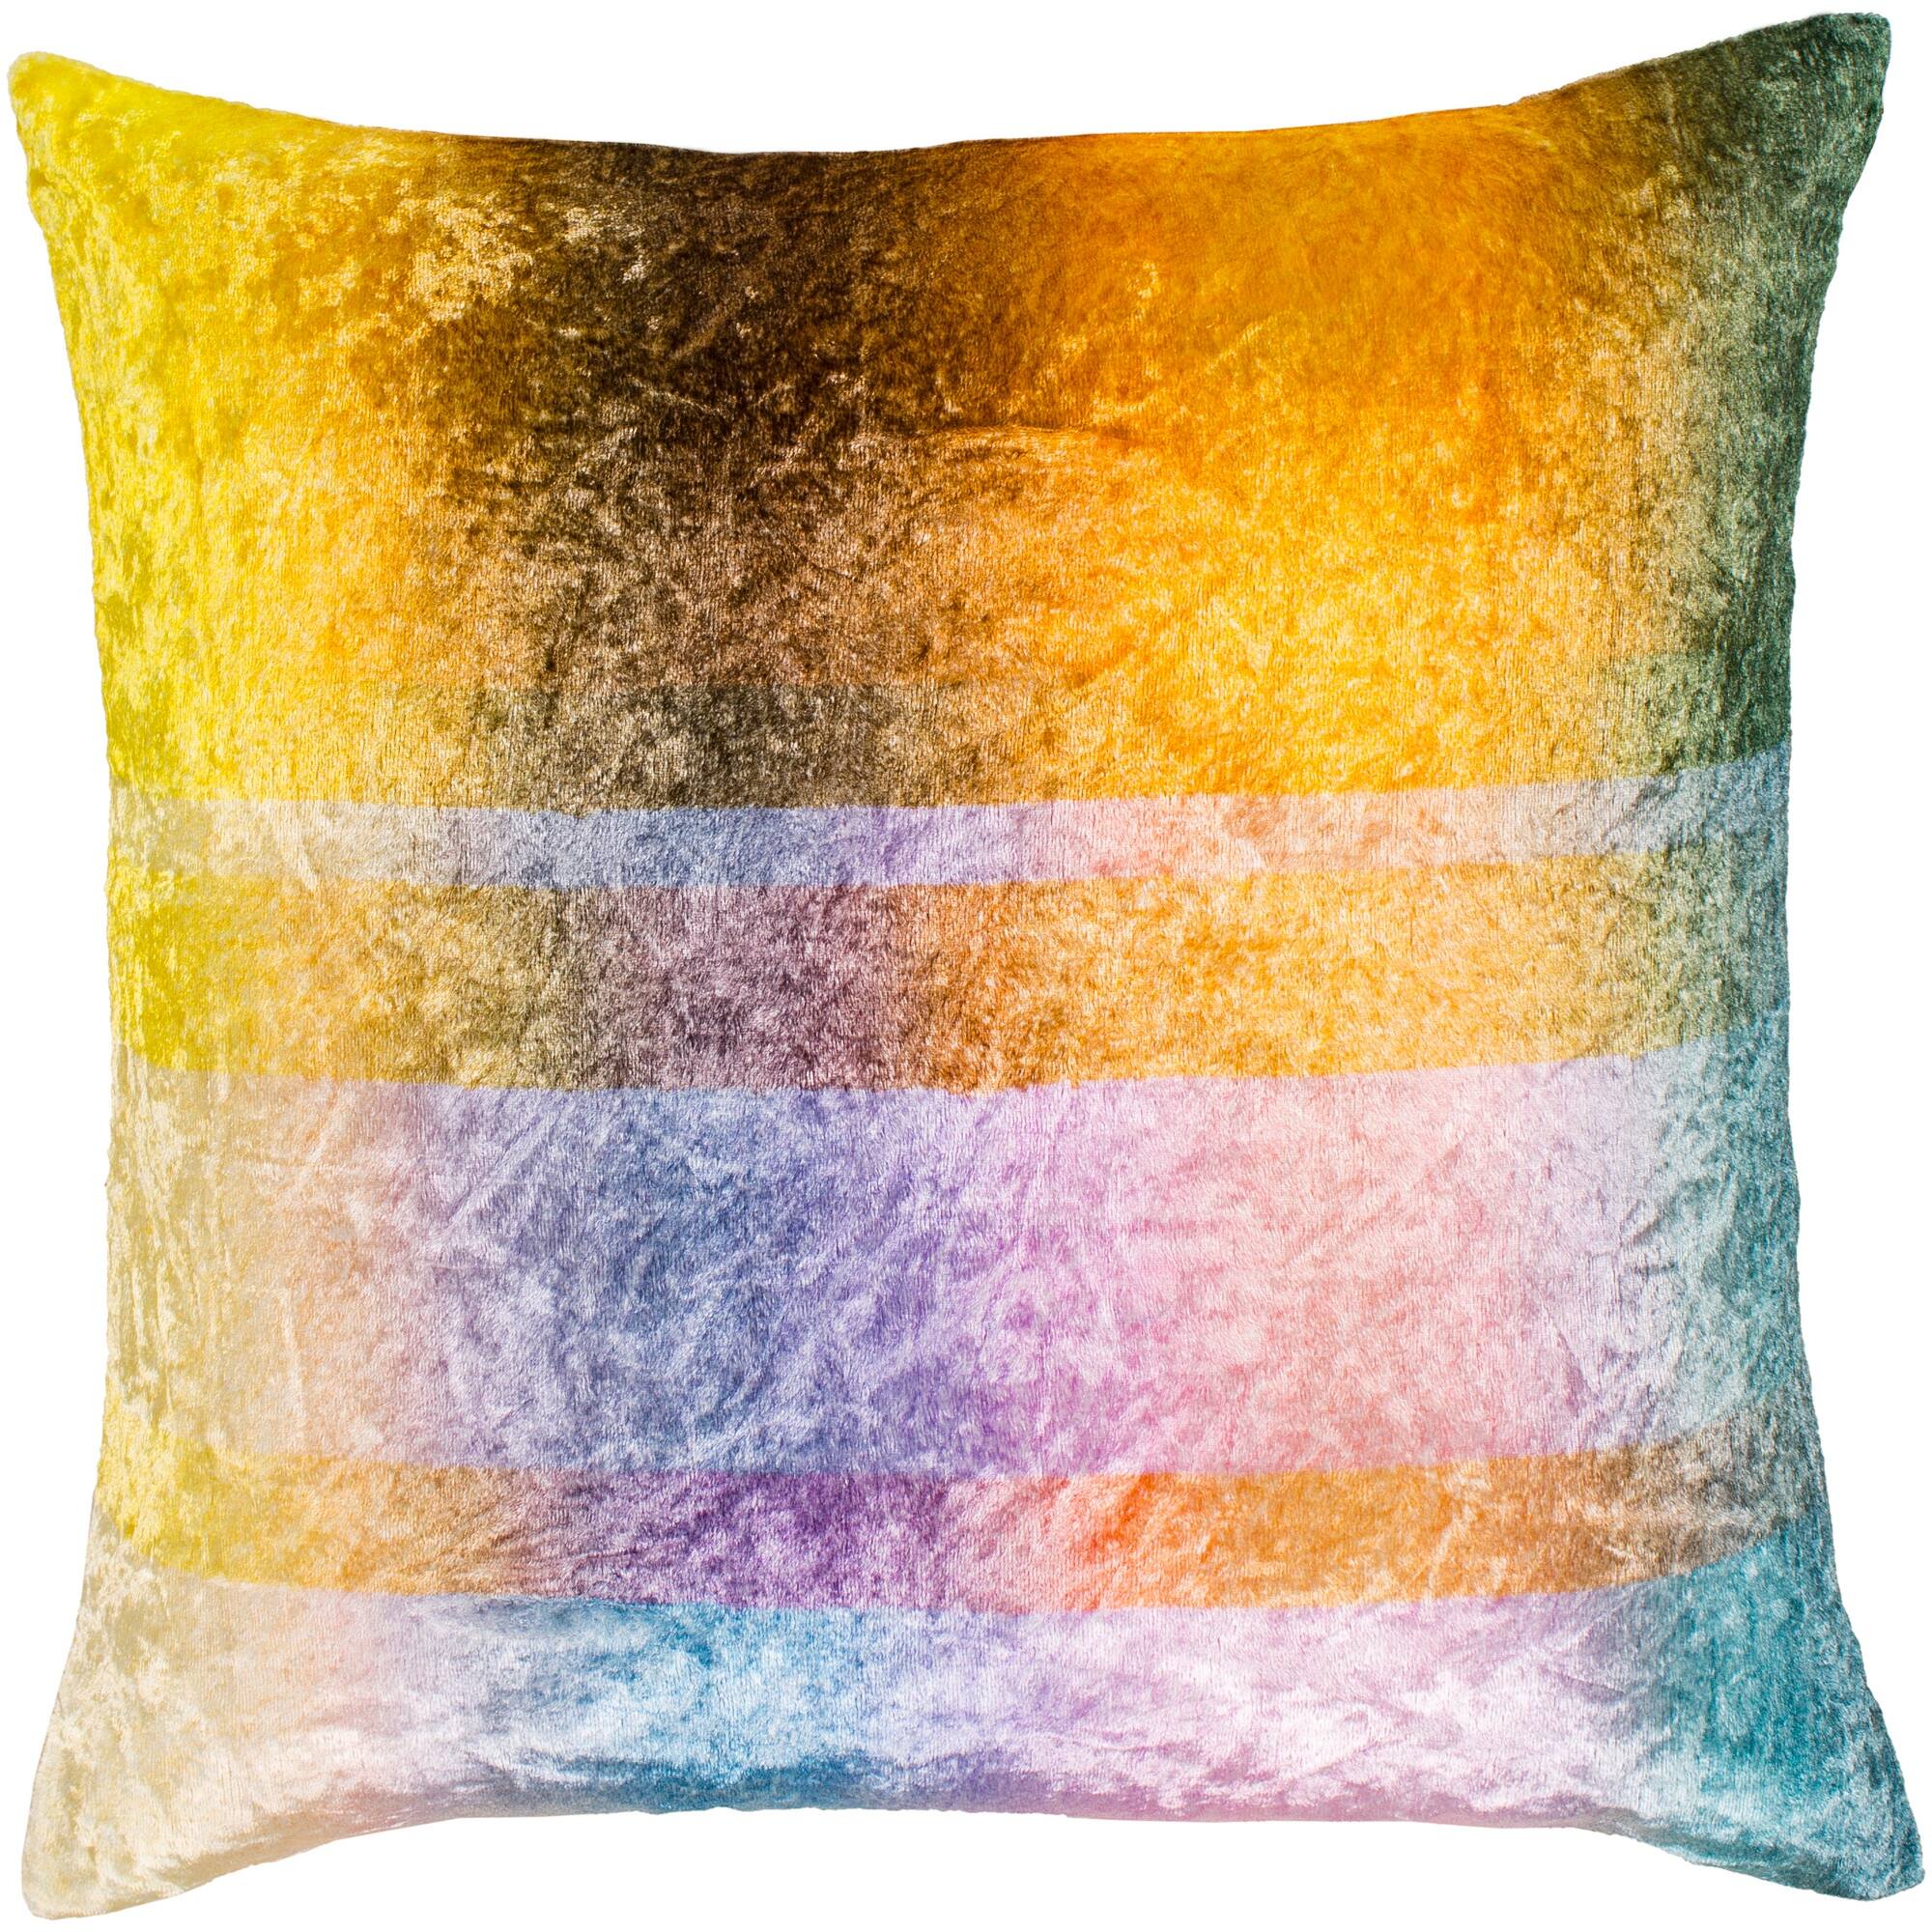 Morpheus Yellow & Aqua Crushed Velvet Throw Pillow Cover (18" x 18")